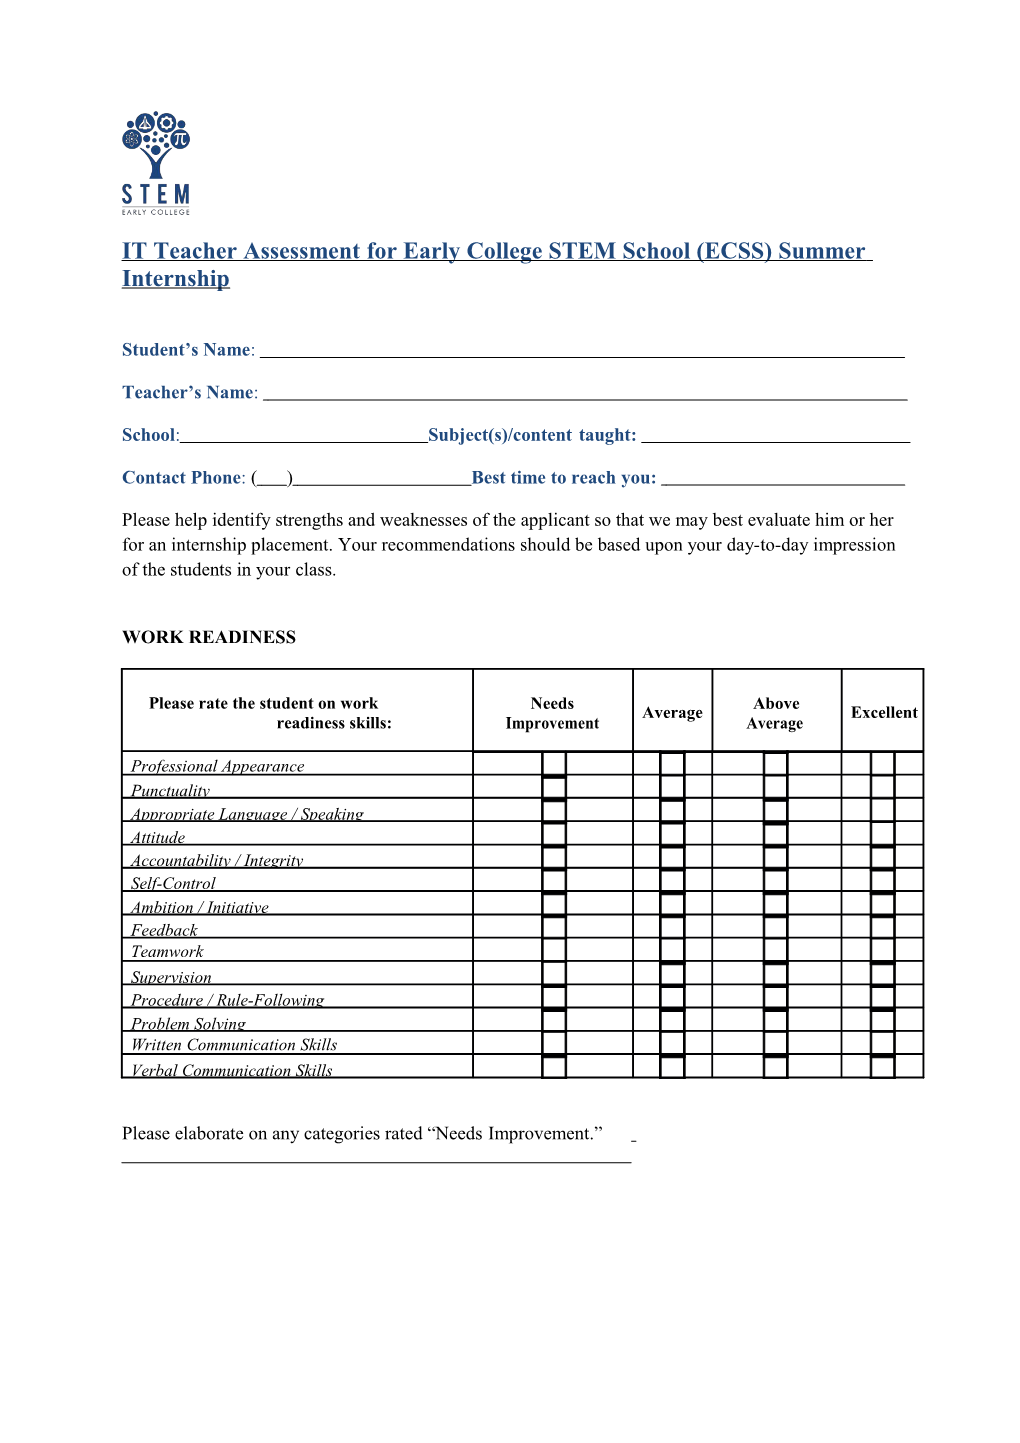 IT Teacher Assessment for Early College STEM School (ECSS) Summer Internship